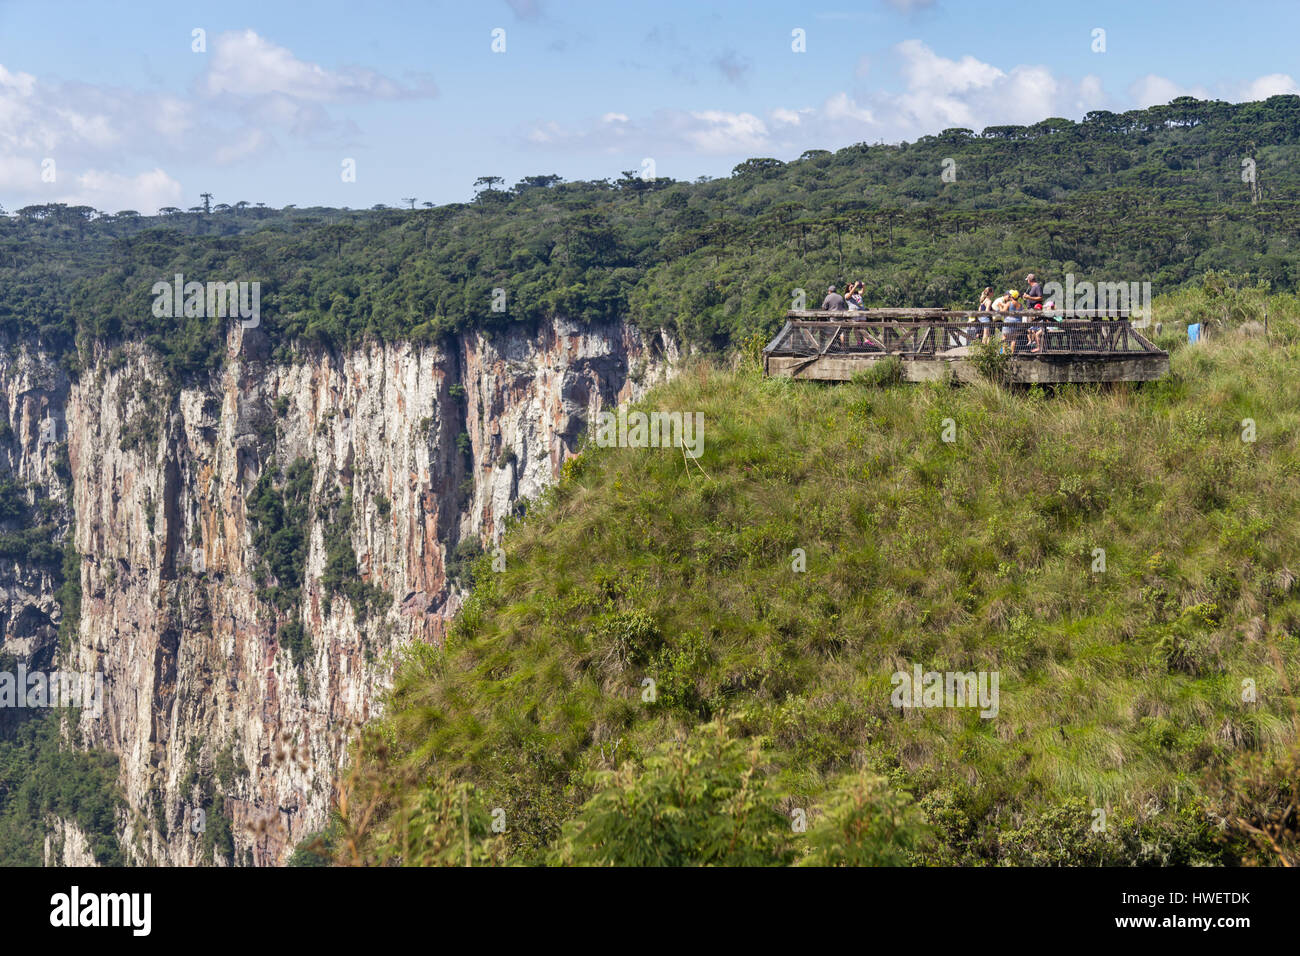 People taking pictures at Itaimbezinho Canyon, Cambara do Sul, Rio Grande do Sul, Brazil Stock Photo